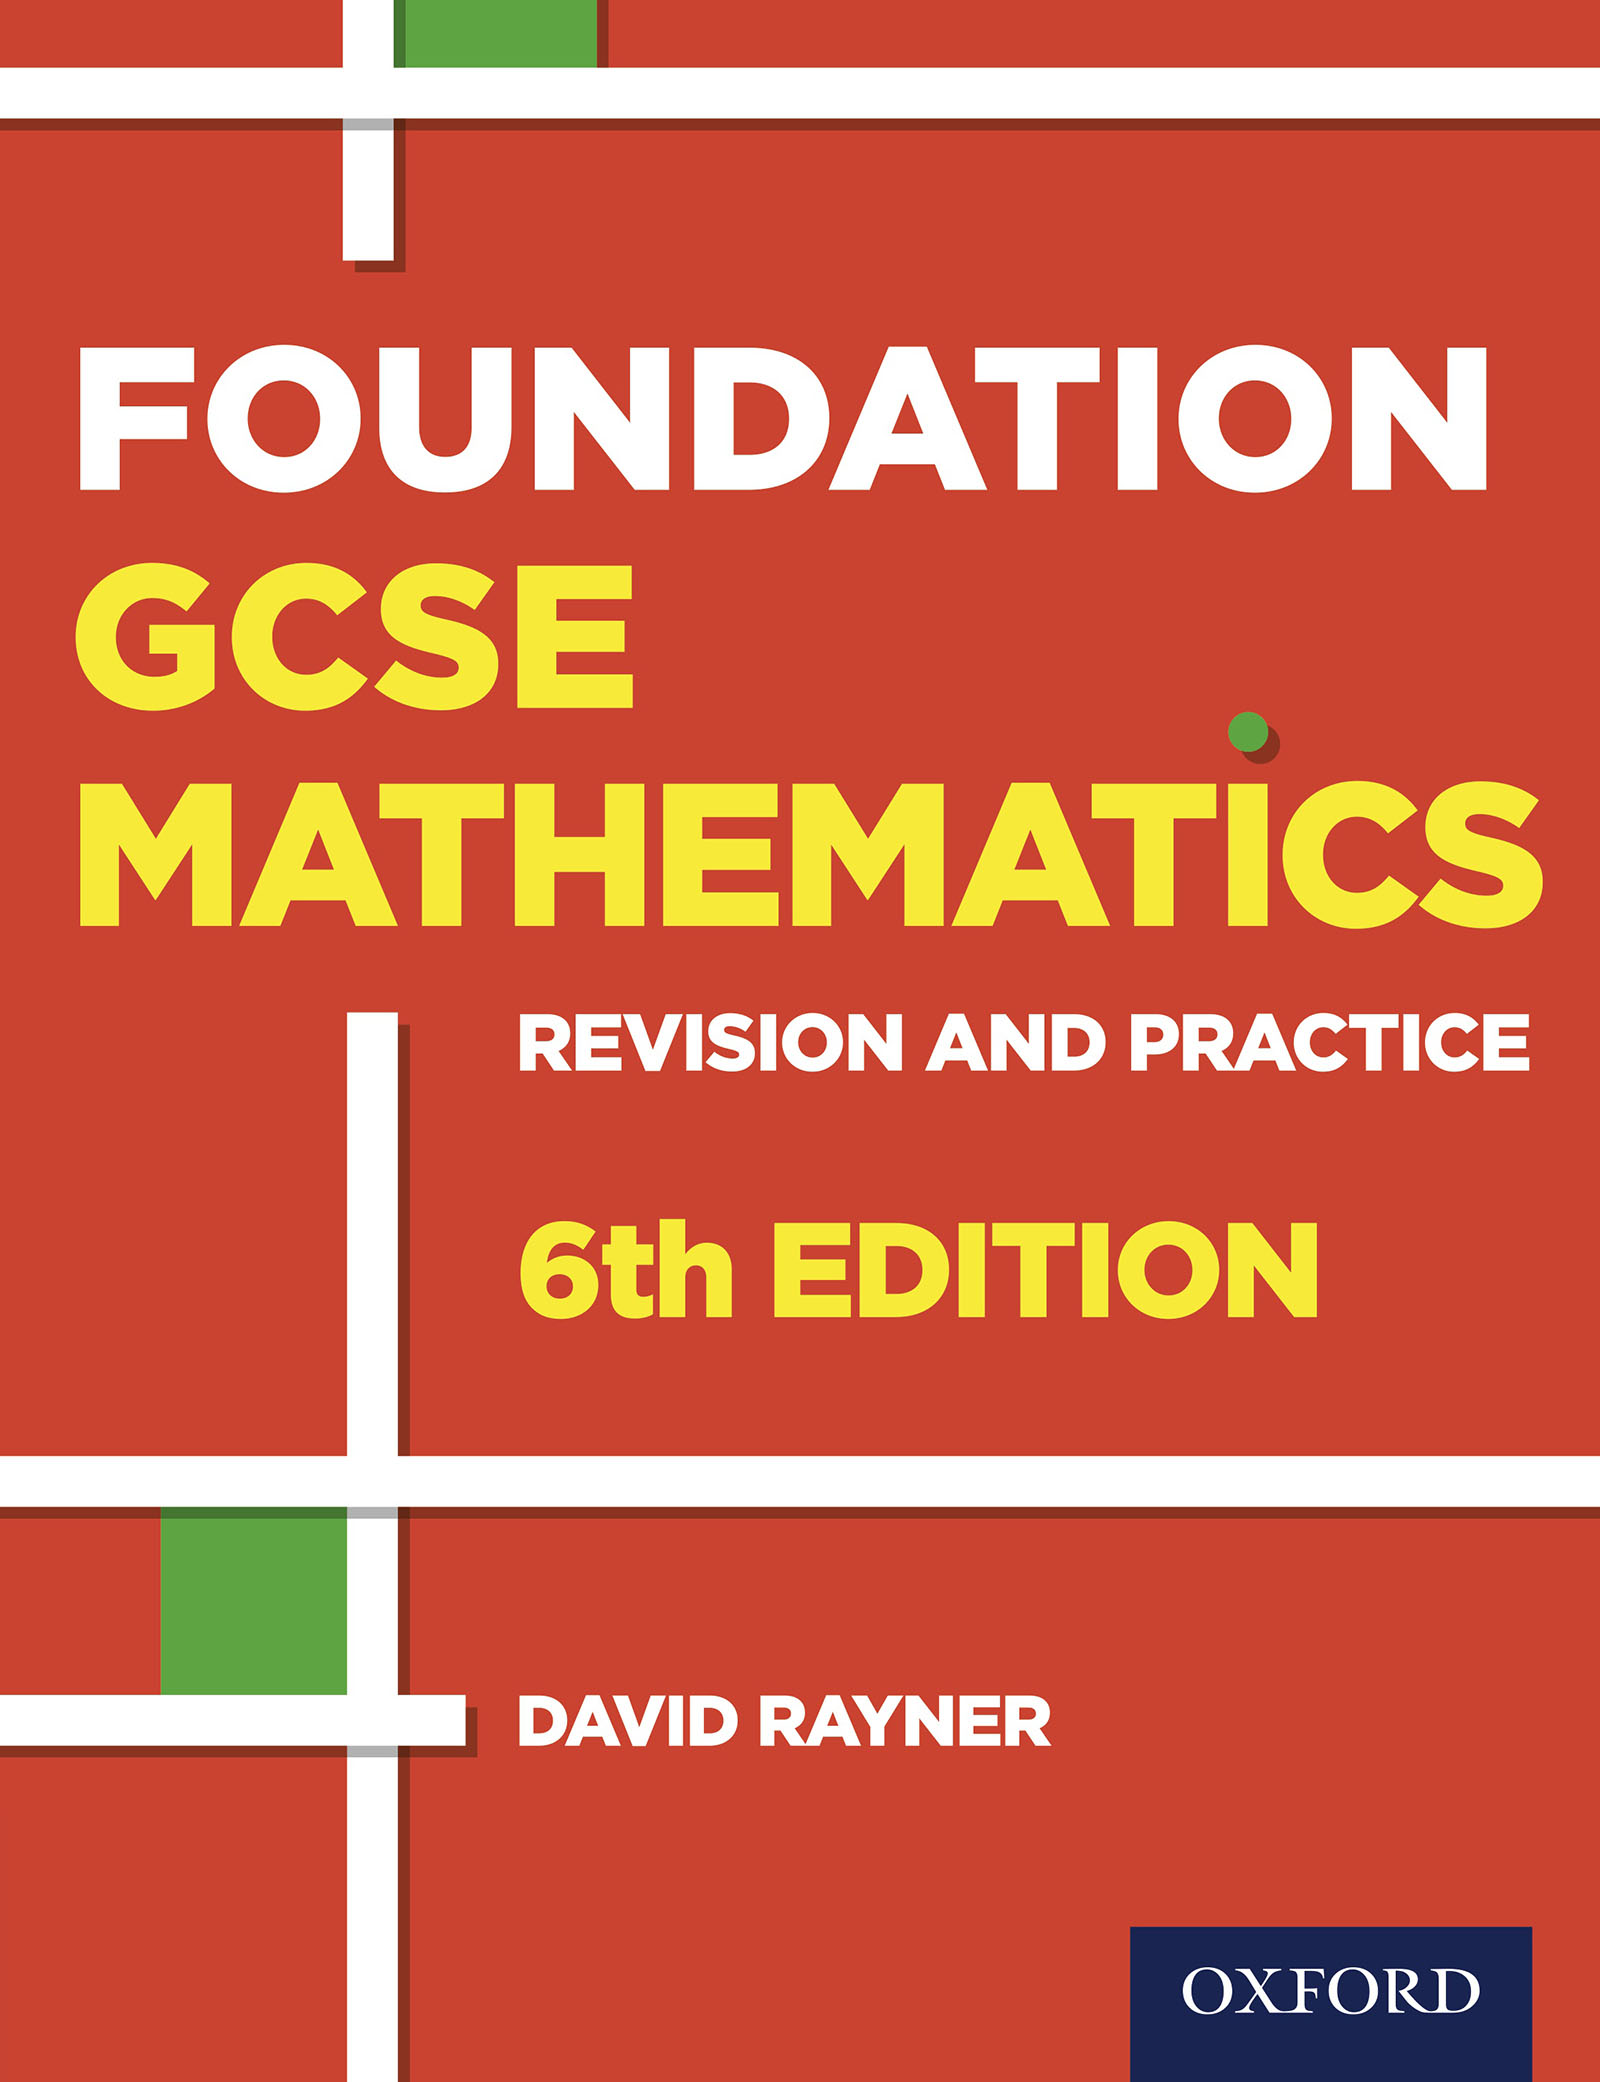 Foundation GCSE Mathematics Revision and Practice